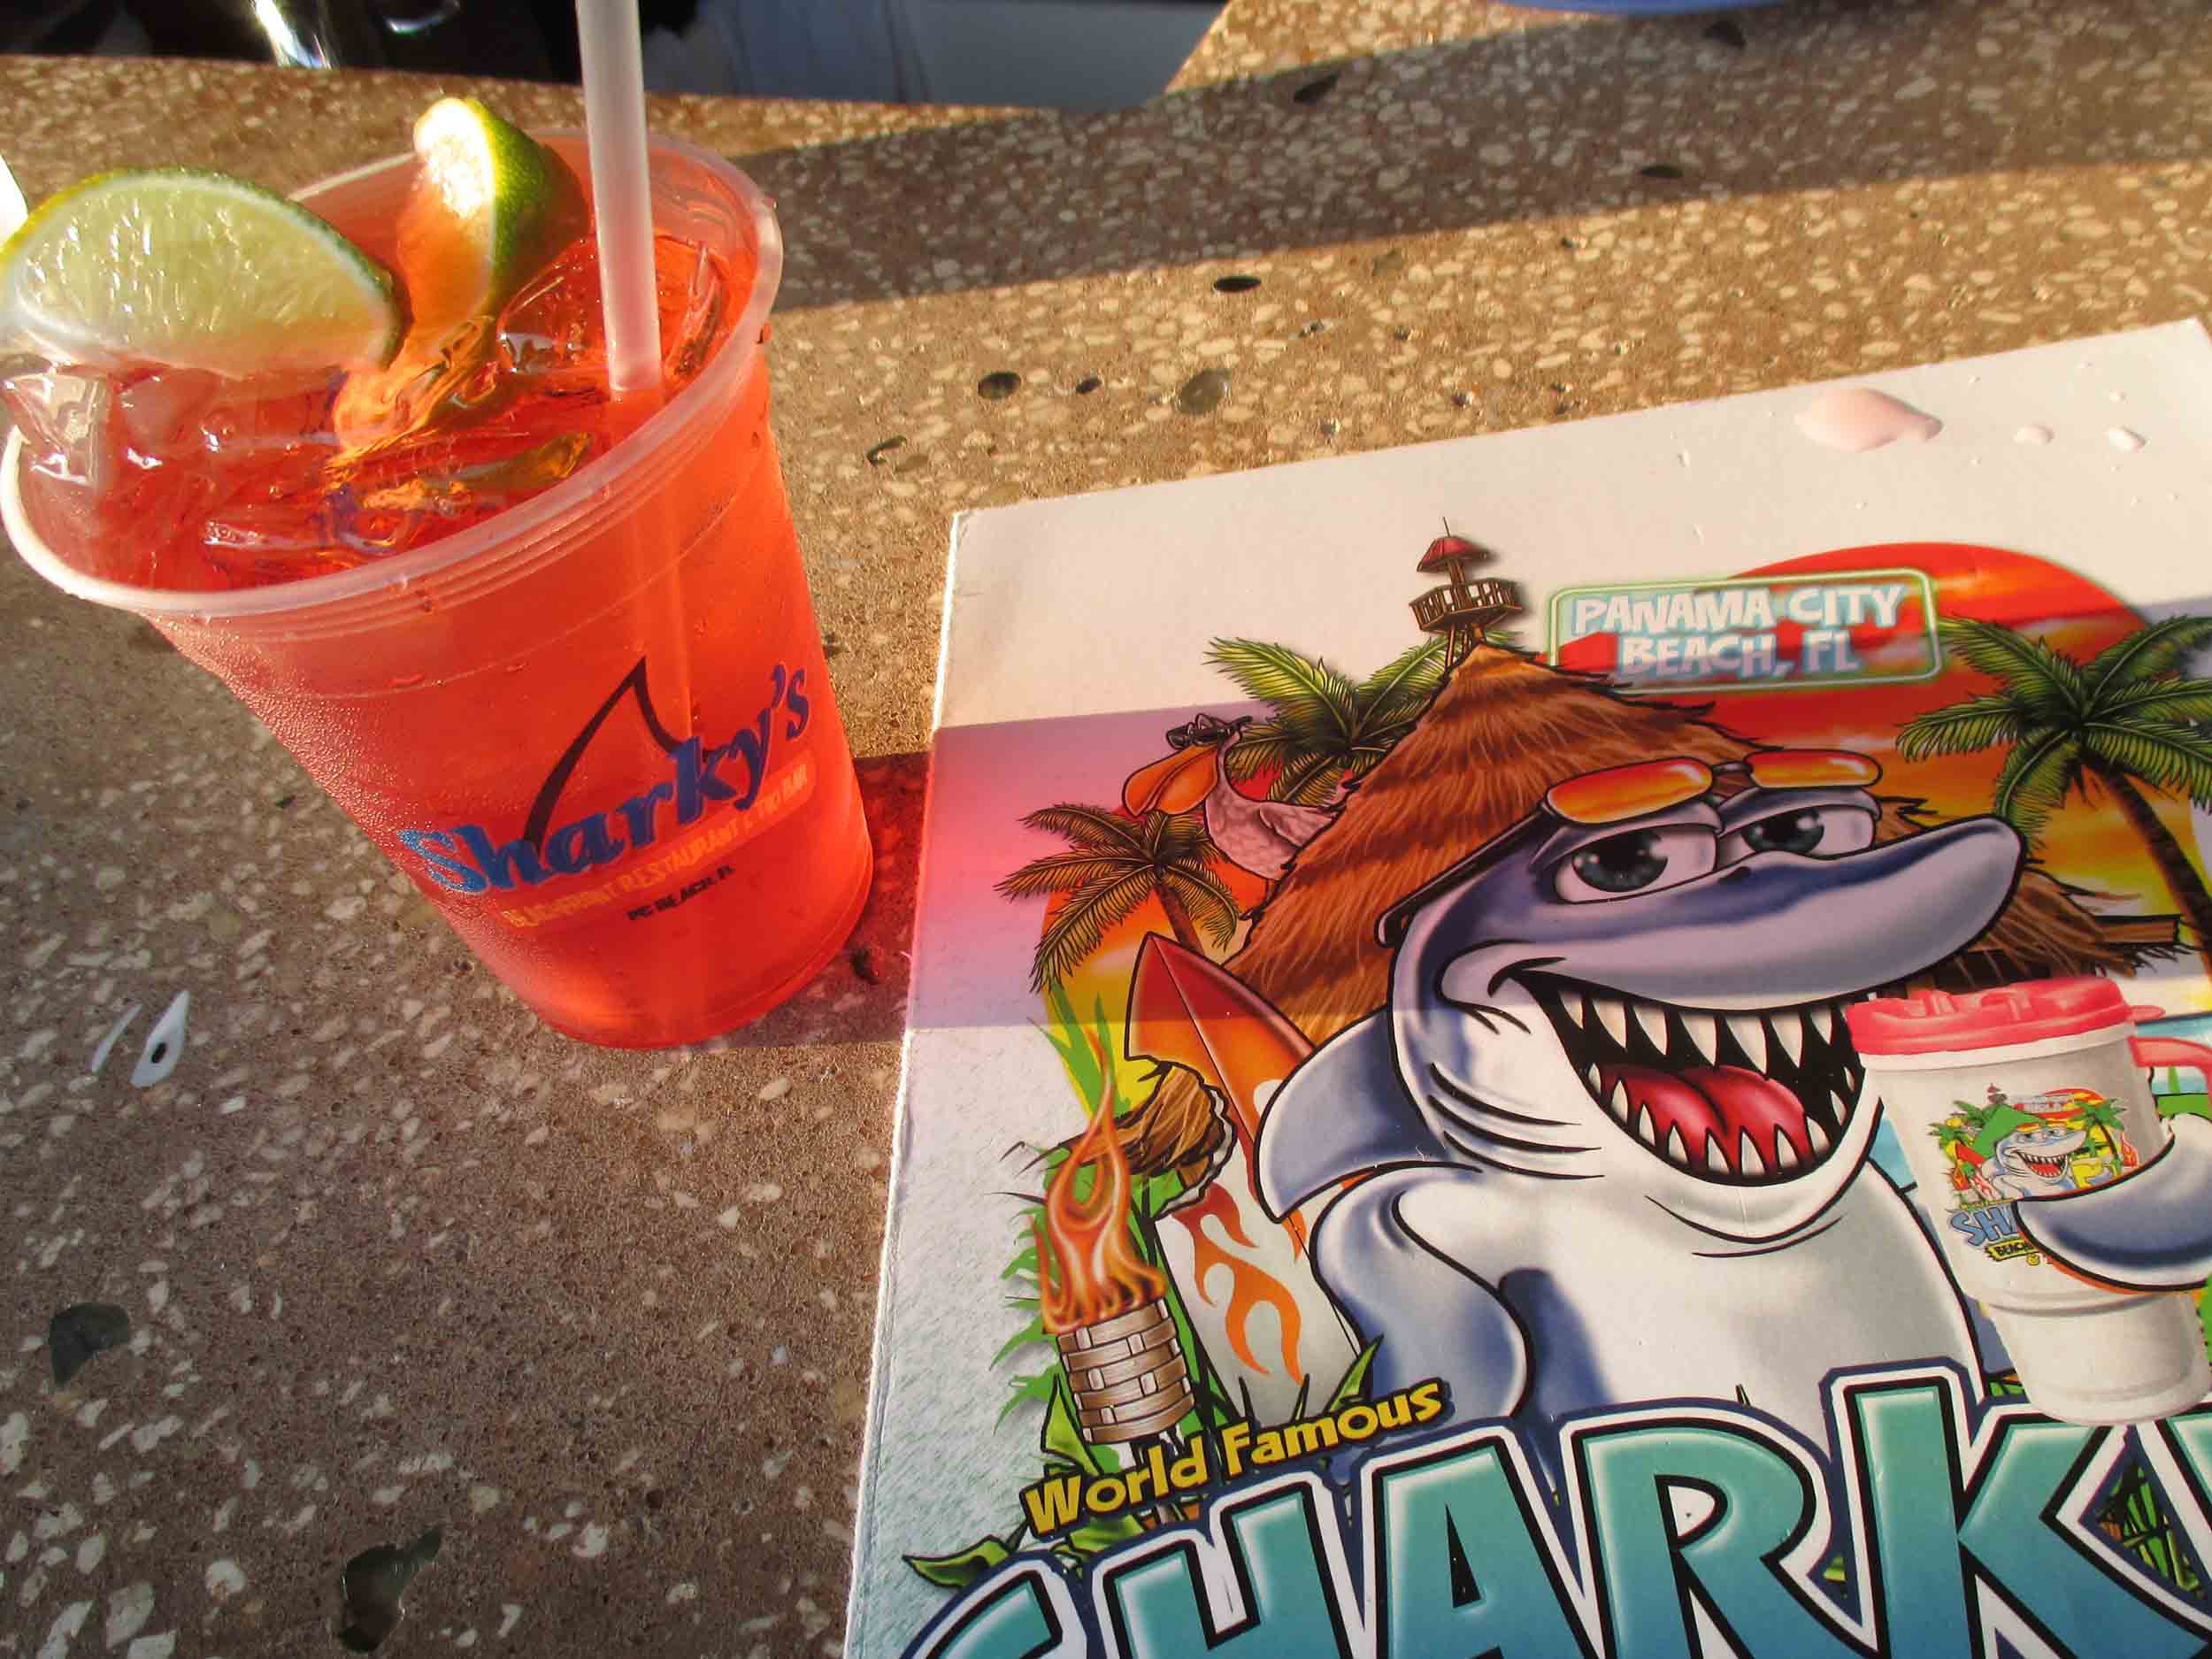 Sharky's Beachfront Restaurant Drink and Menu